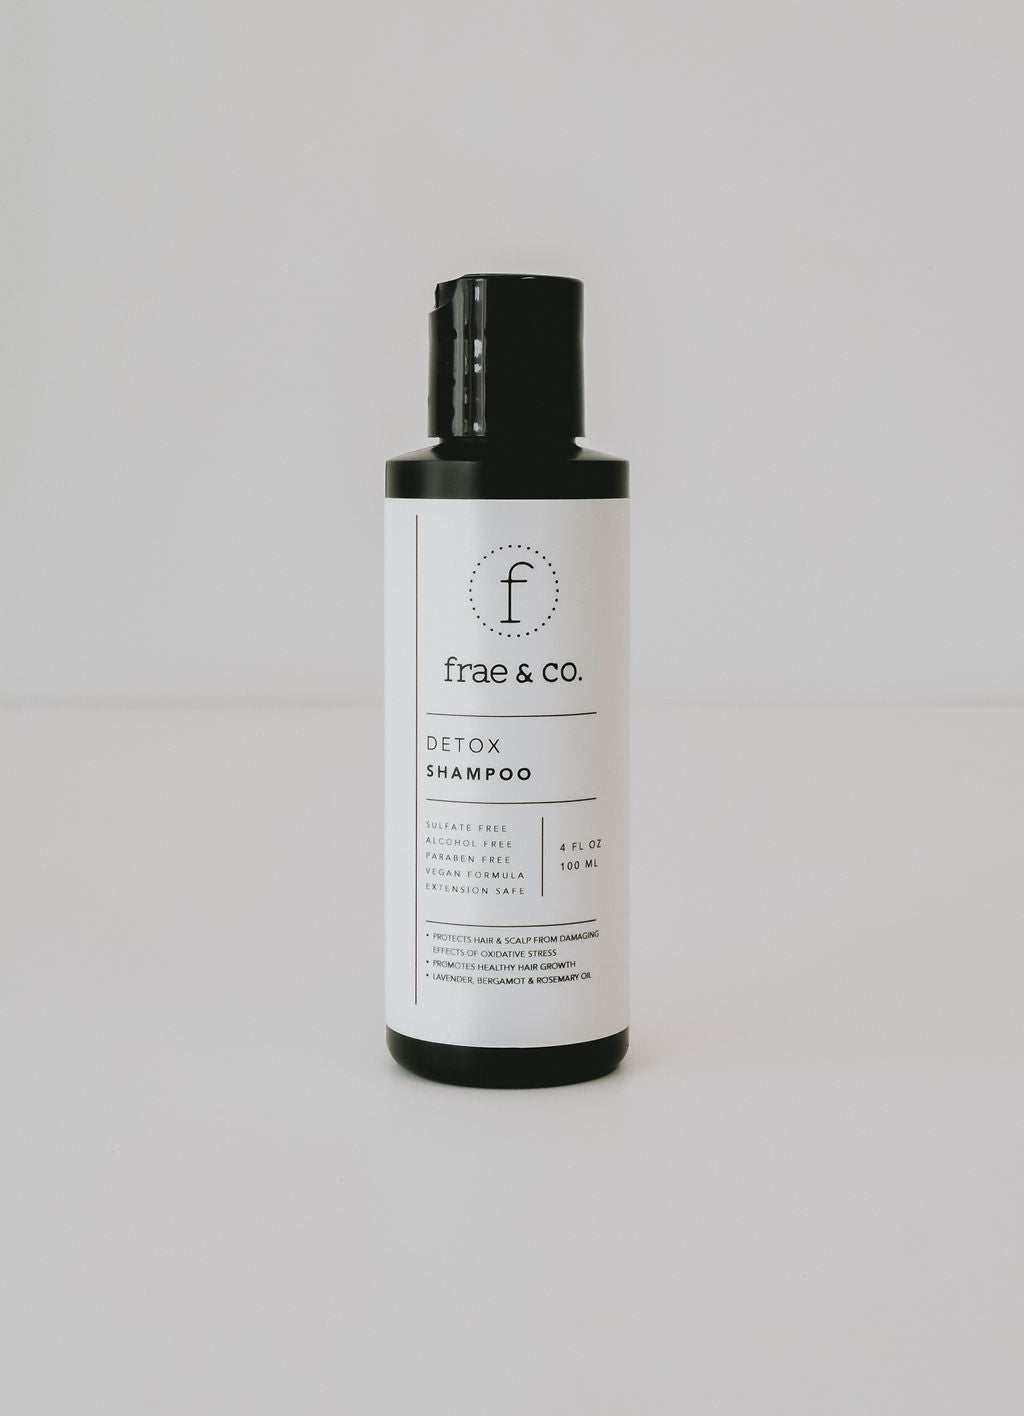 Frae & Co. Detox Shampoo